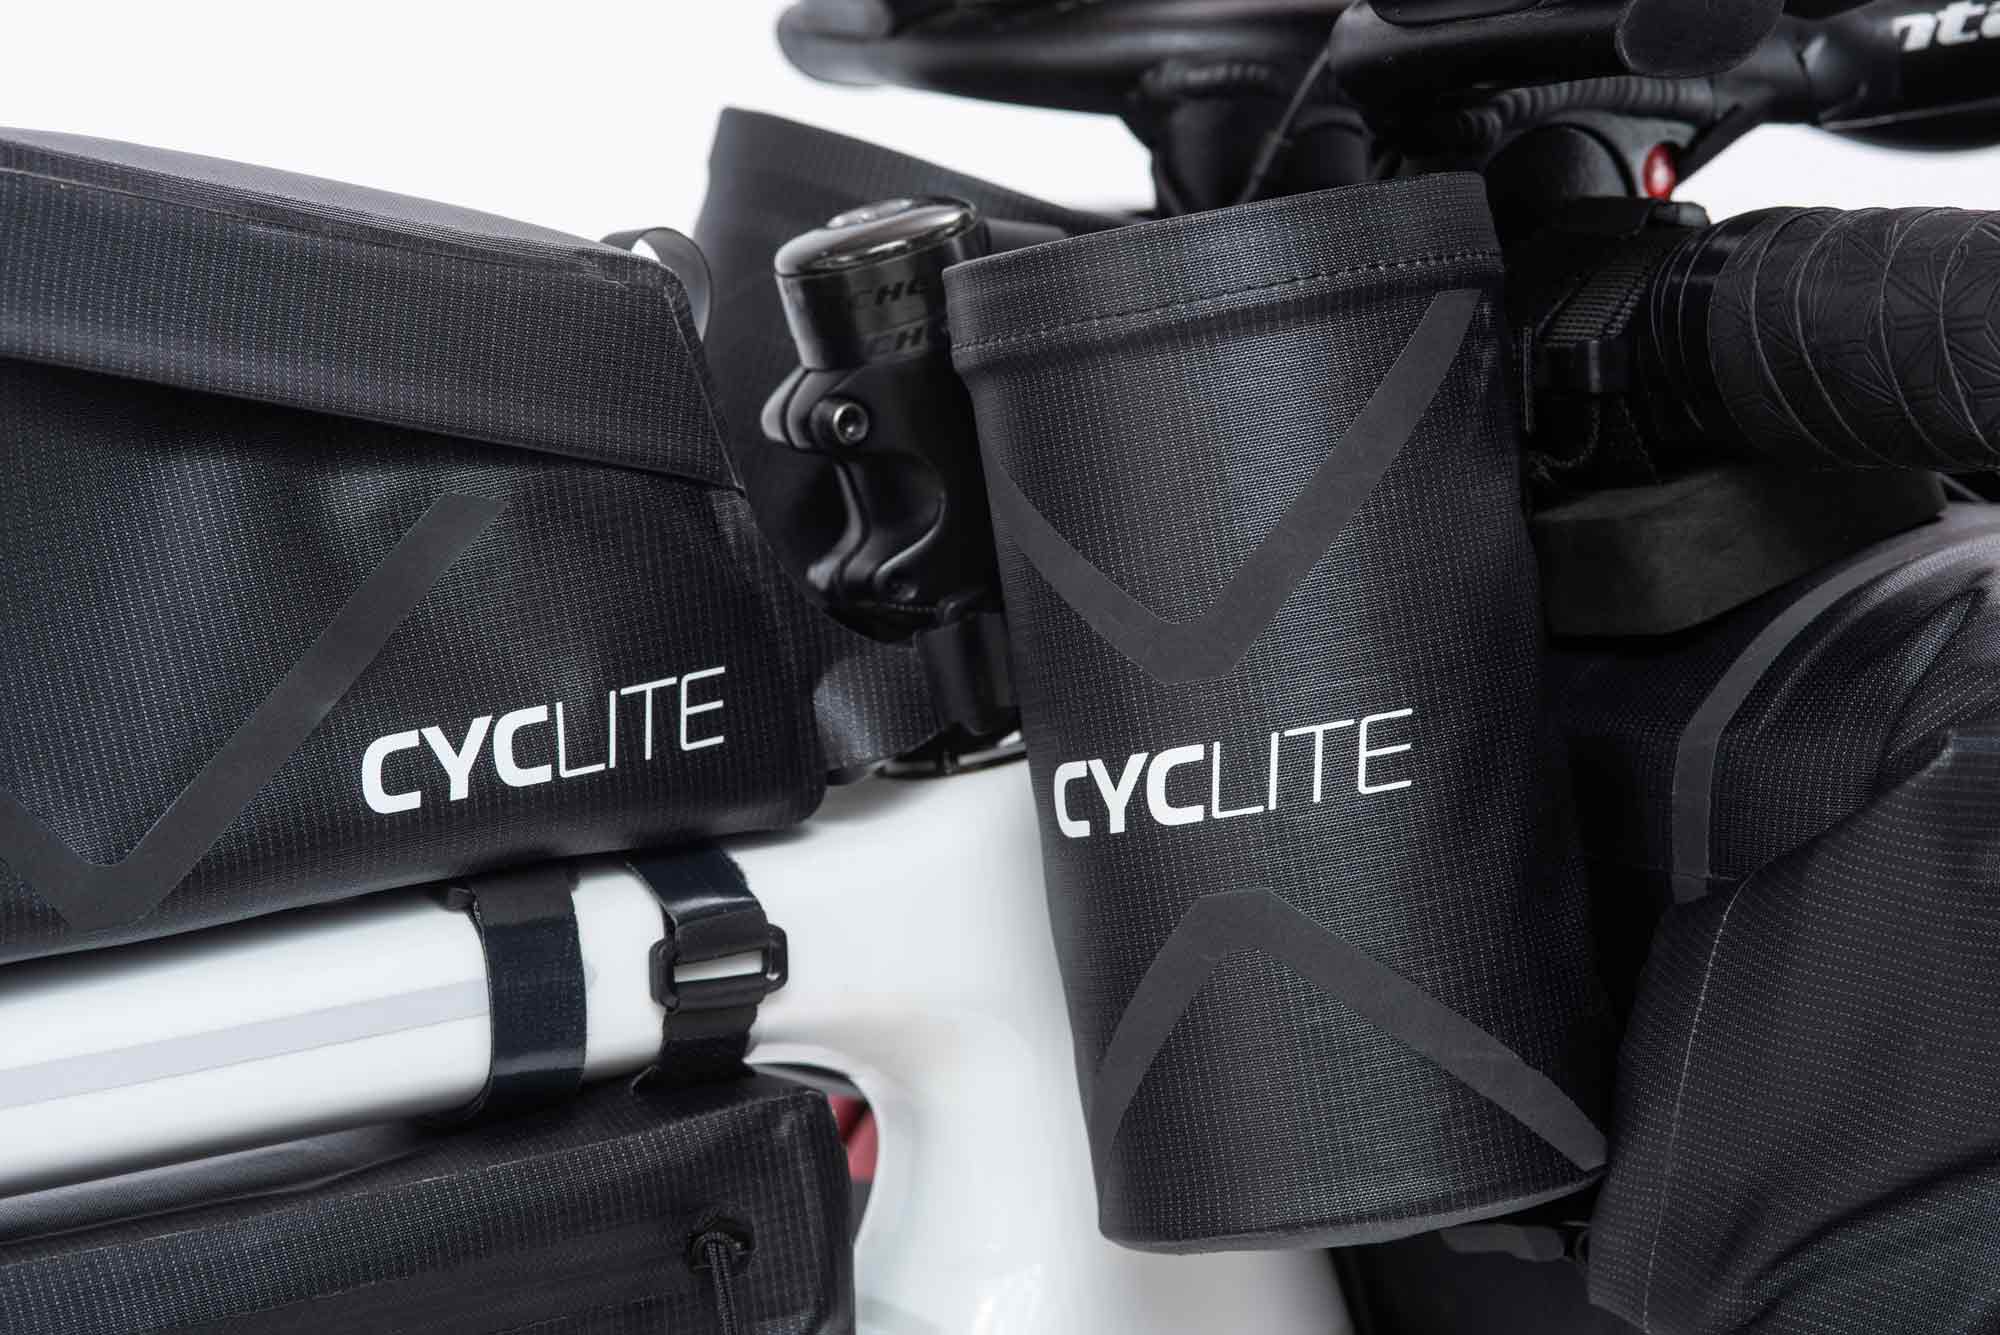 Cyclite 787 | lifecycle magazine